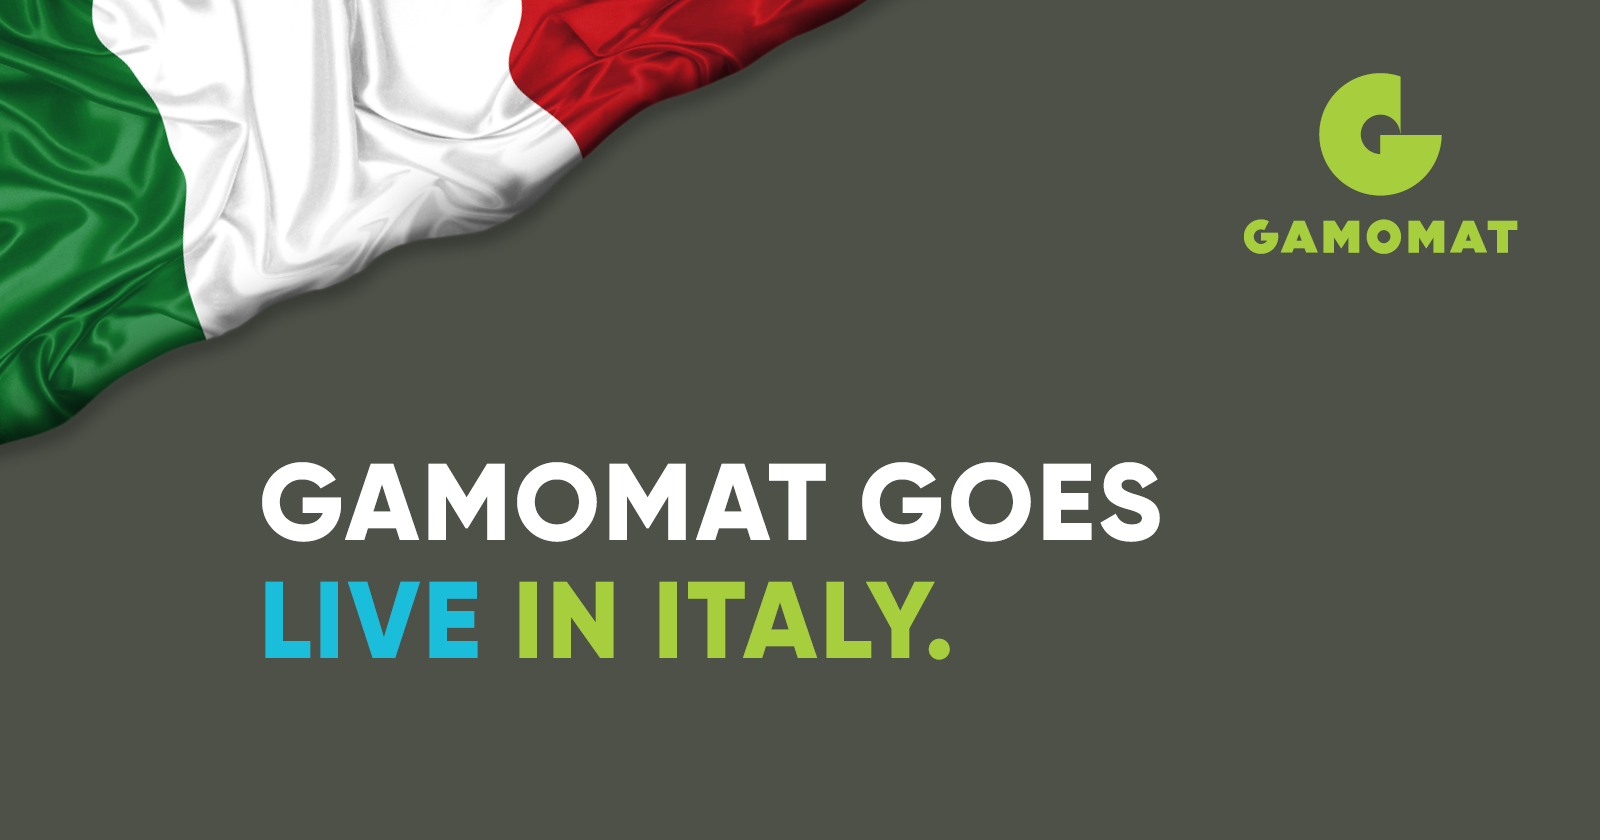 GAMOMAT expands into Italy through Bragg Gaming Group partnership